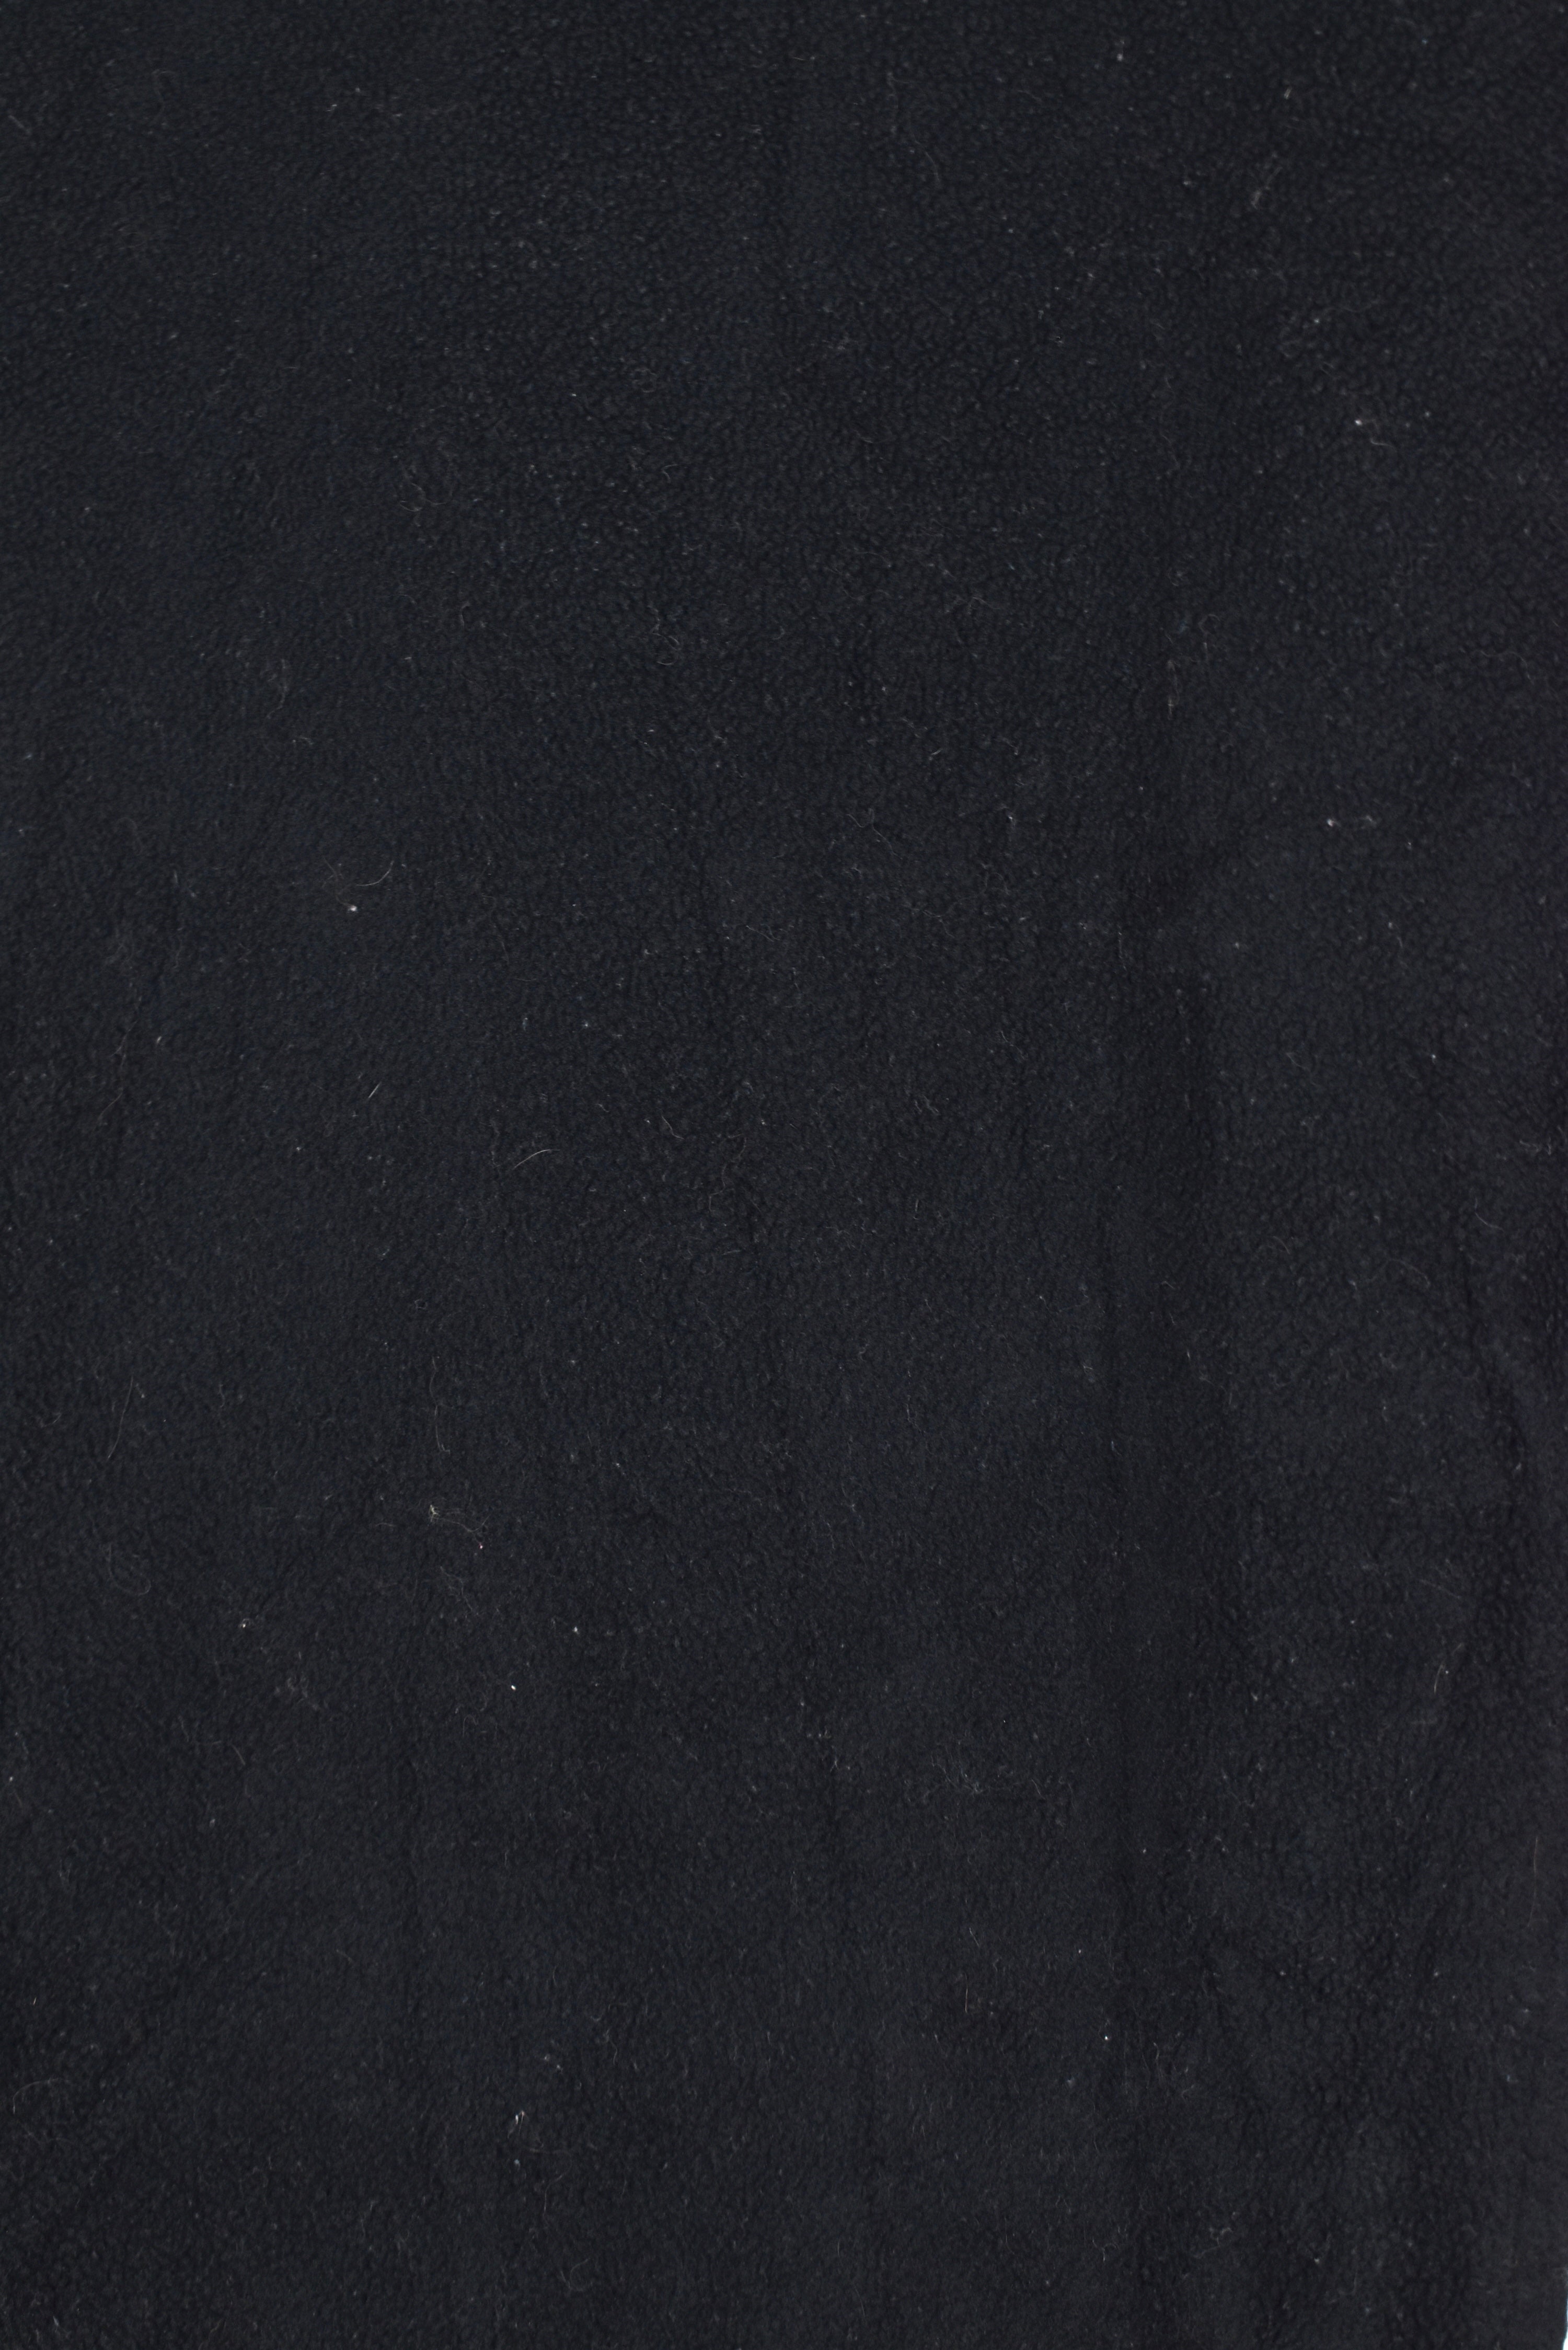 Women's modern Maple Leaves fleece, NHL black sweatshirt - Medium